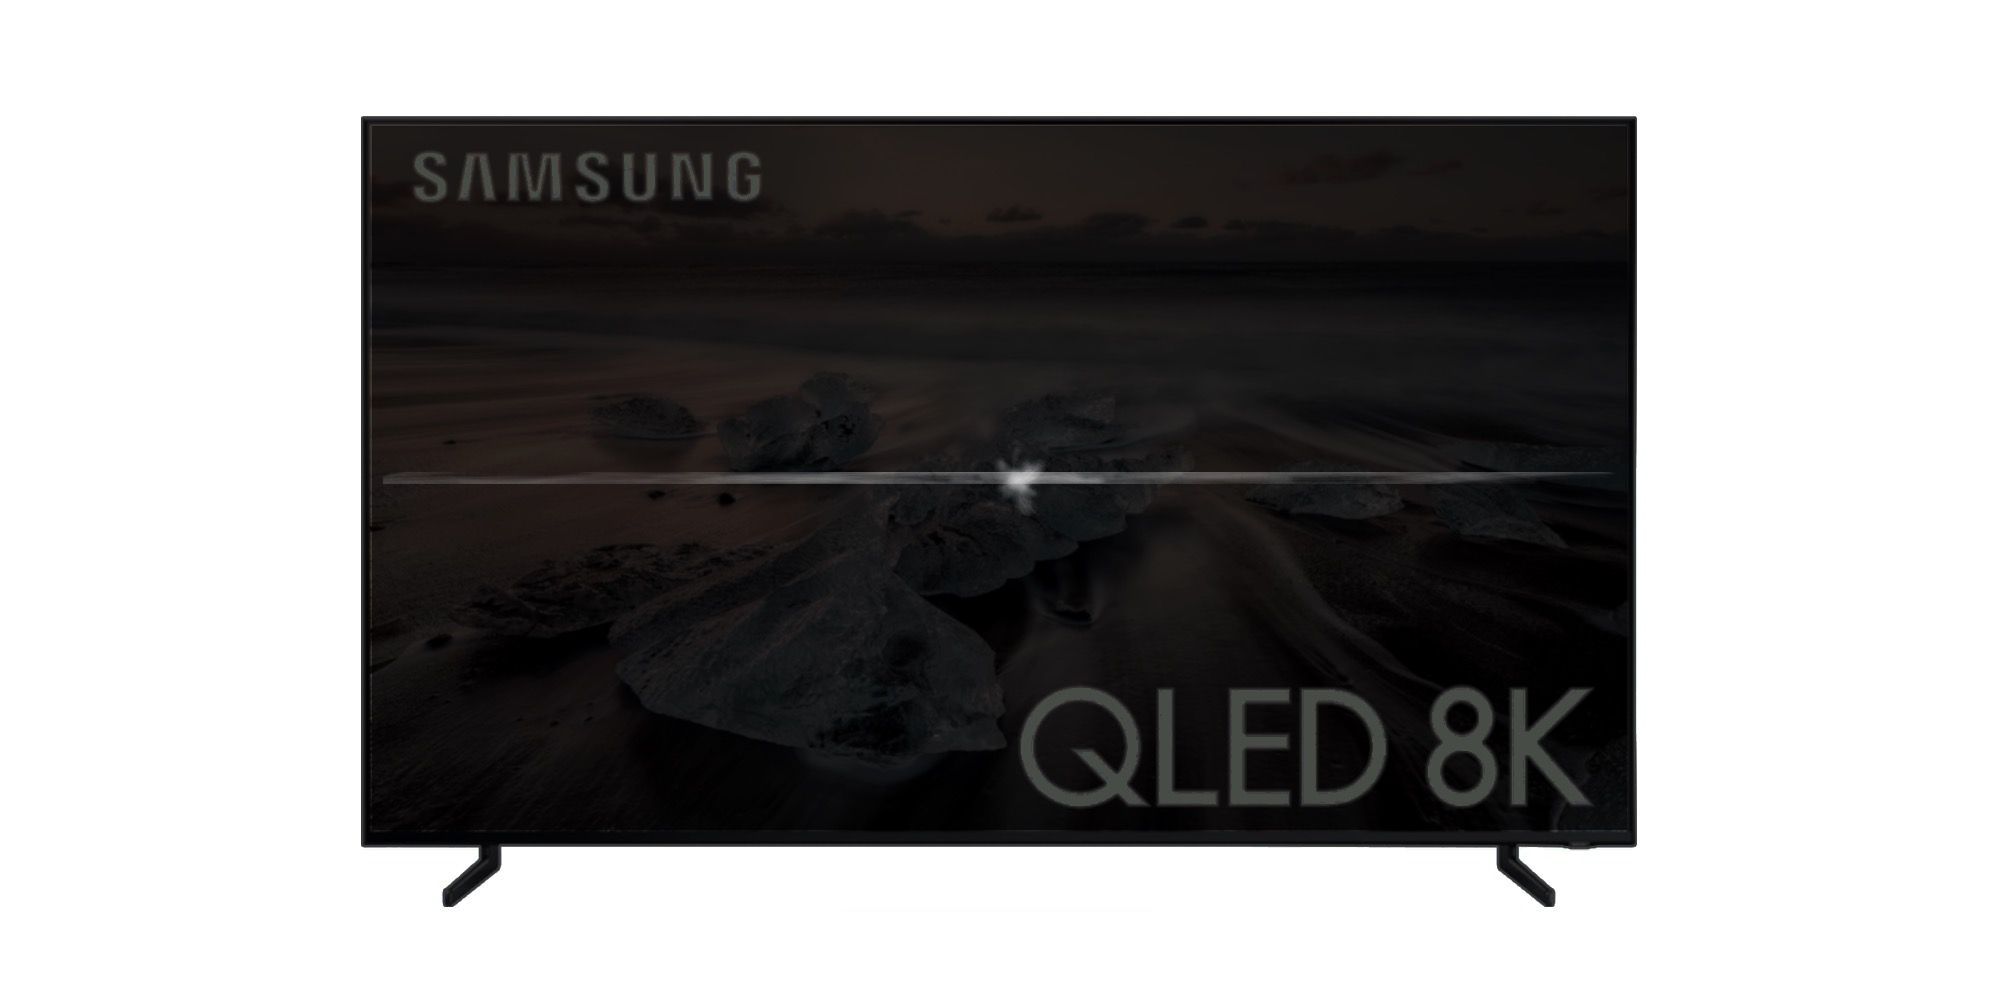 Samsung Smart TV powering off